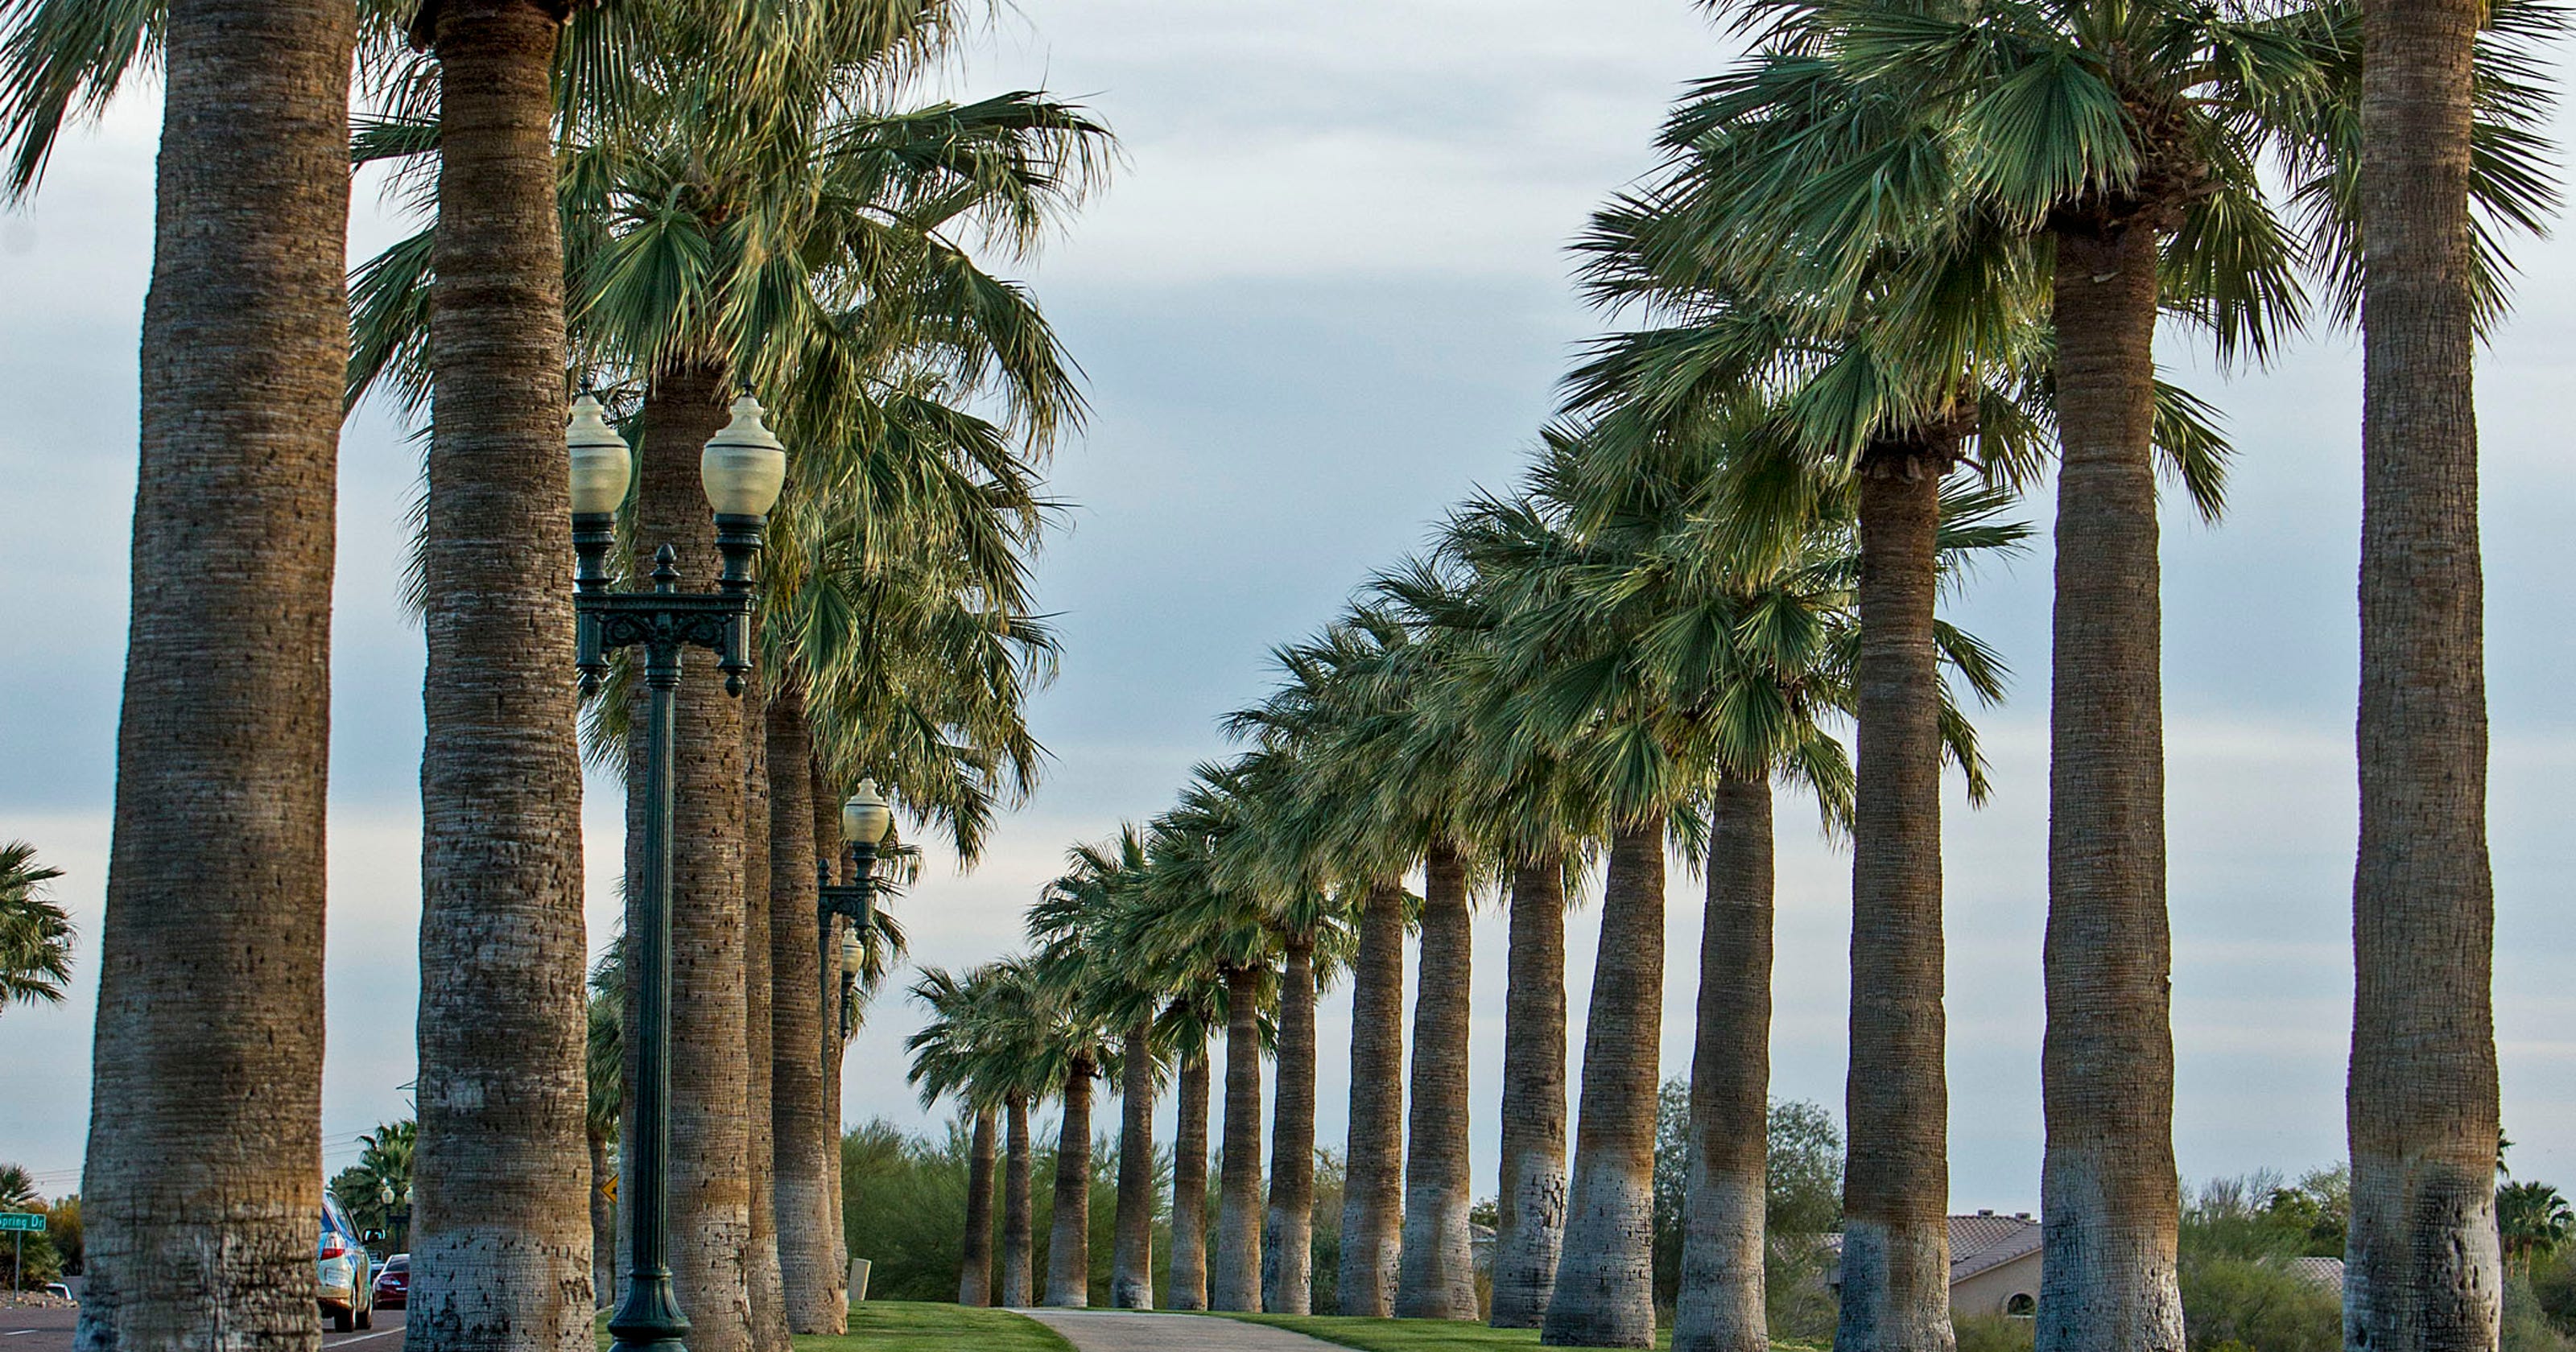 Are palm trees native to Arizona?